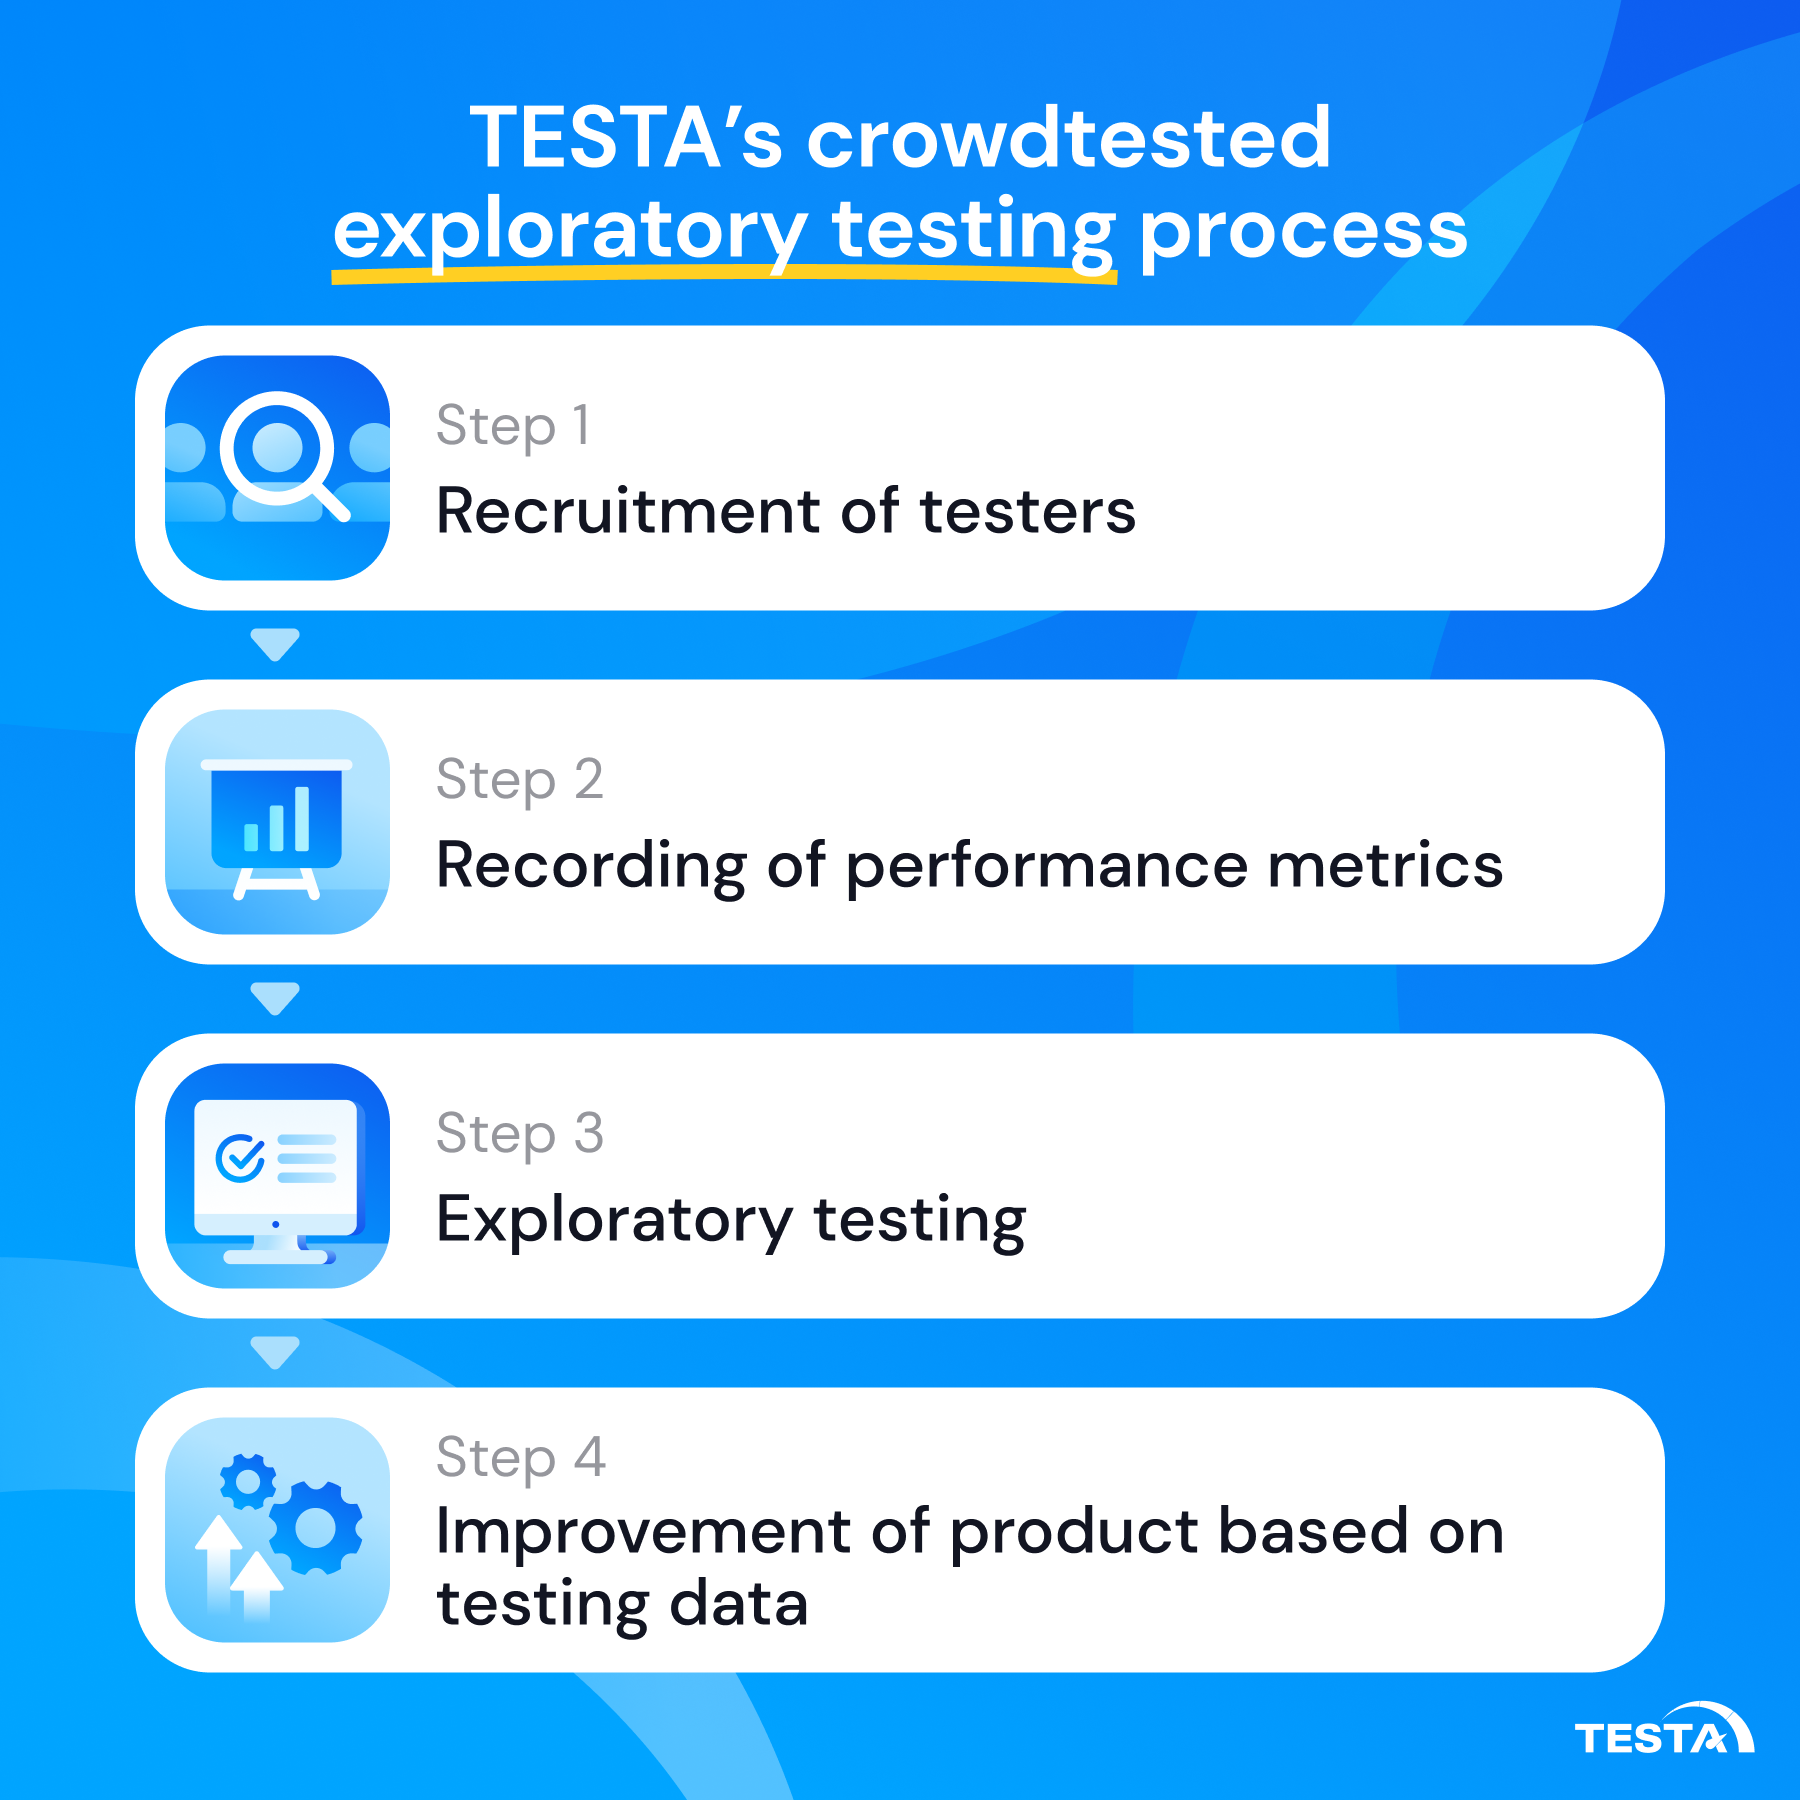 TESTA’s crowdtested exploratory testing process